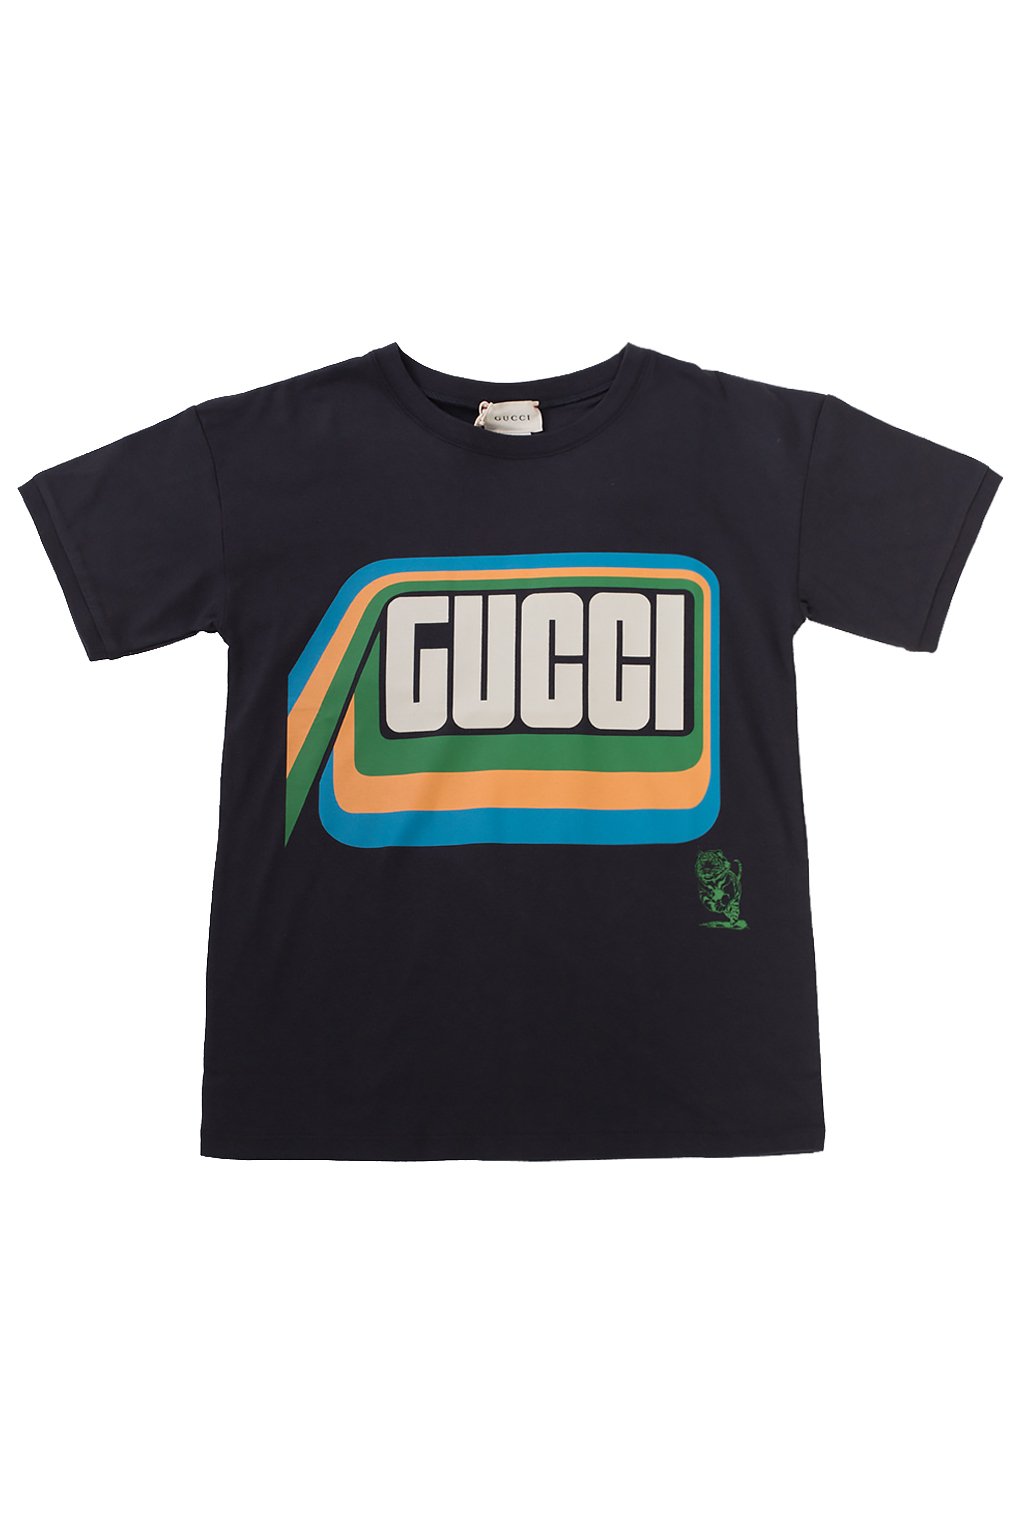 Logo T-shirt Gucci Kids - Vitkac France